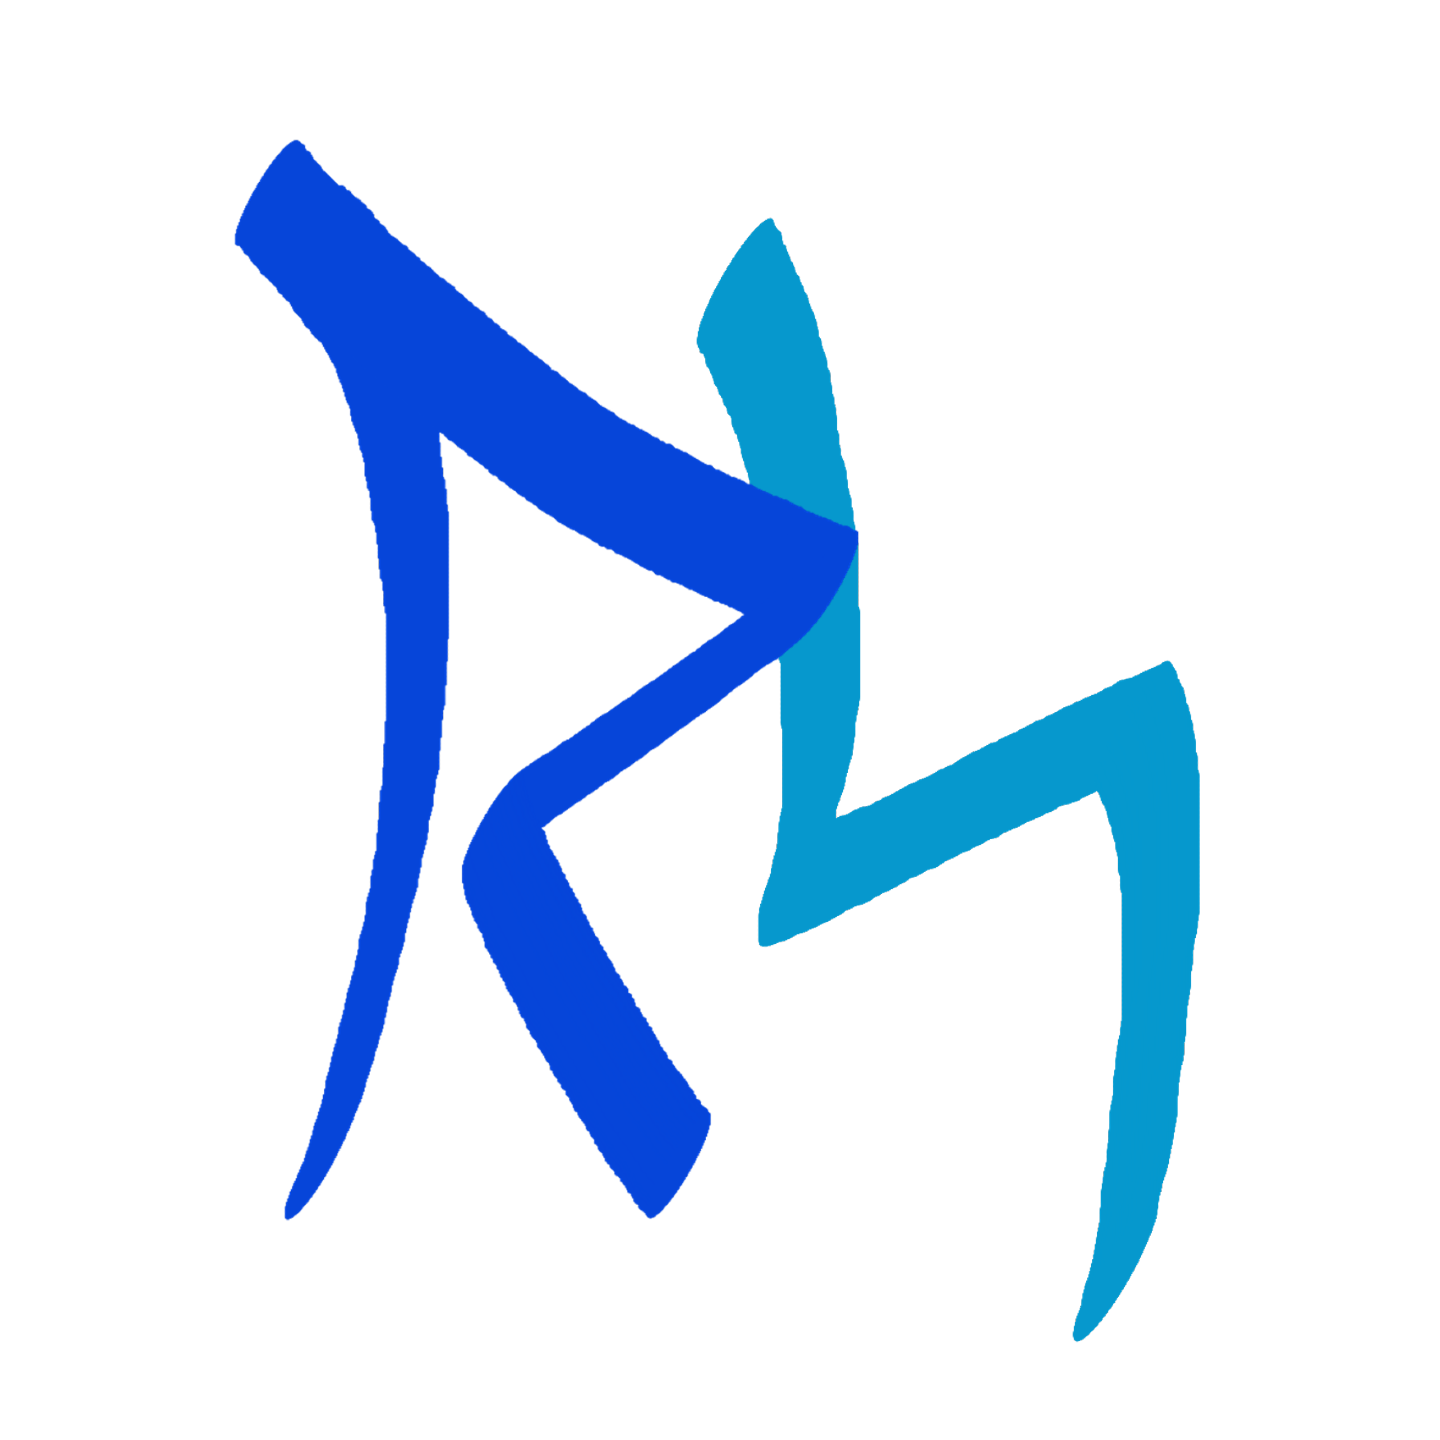 Rune School logo